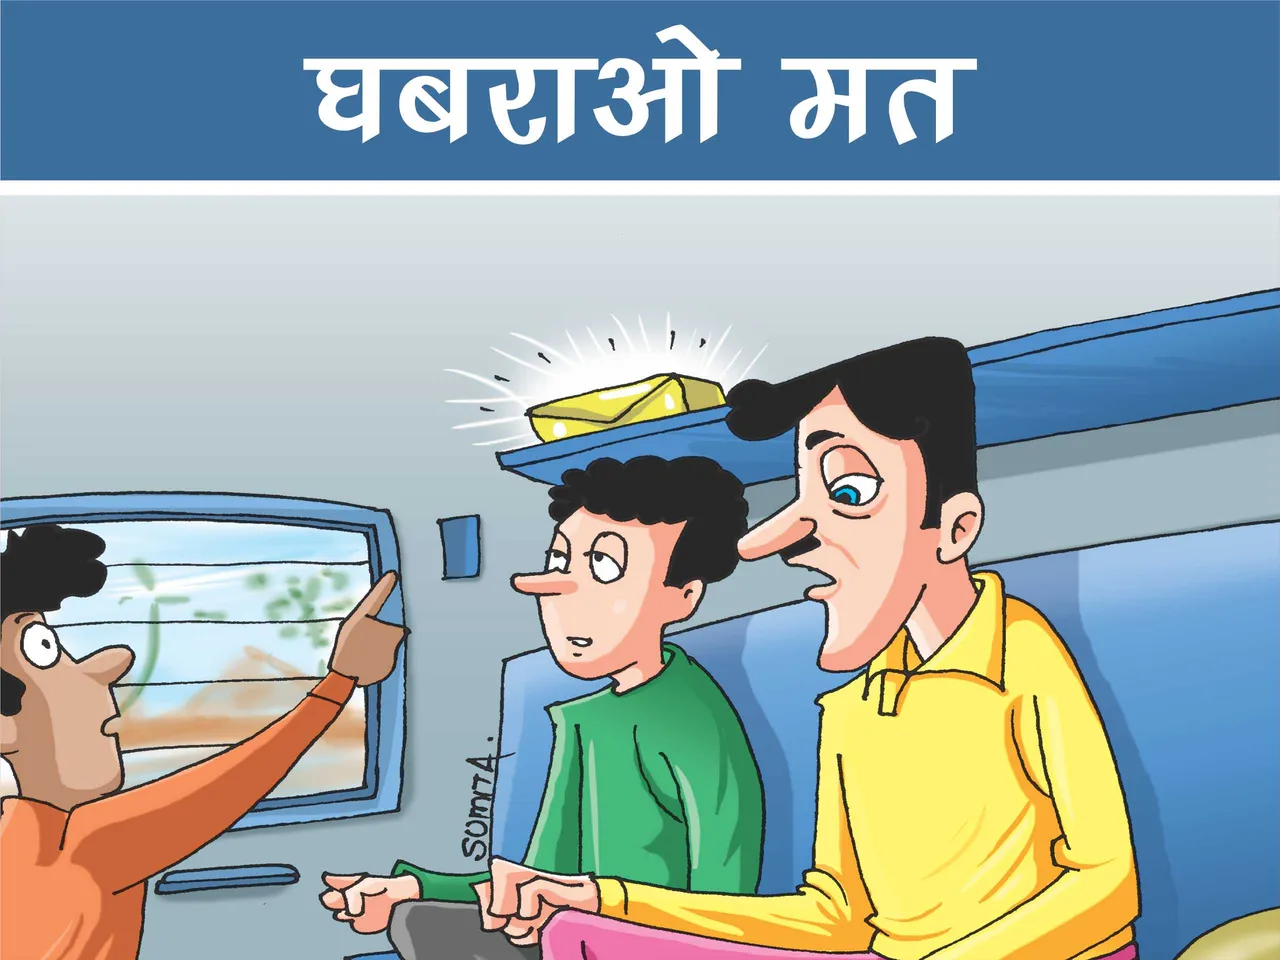 Public in Train cartoon image